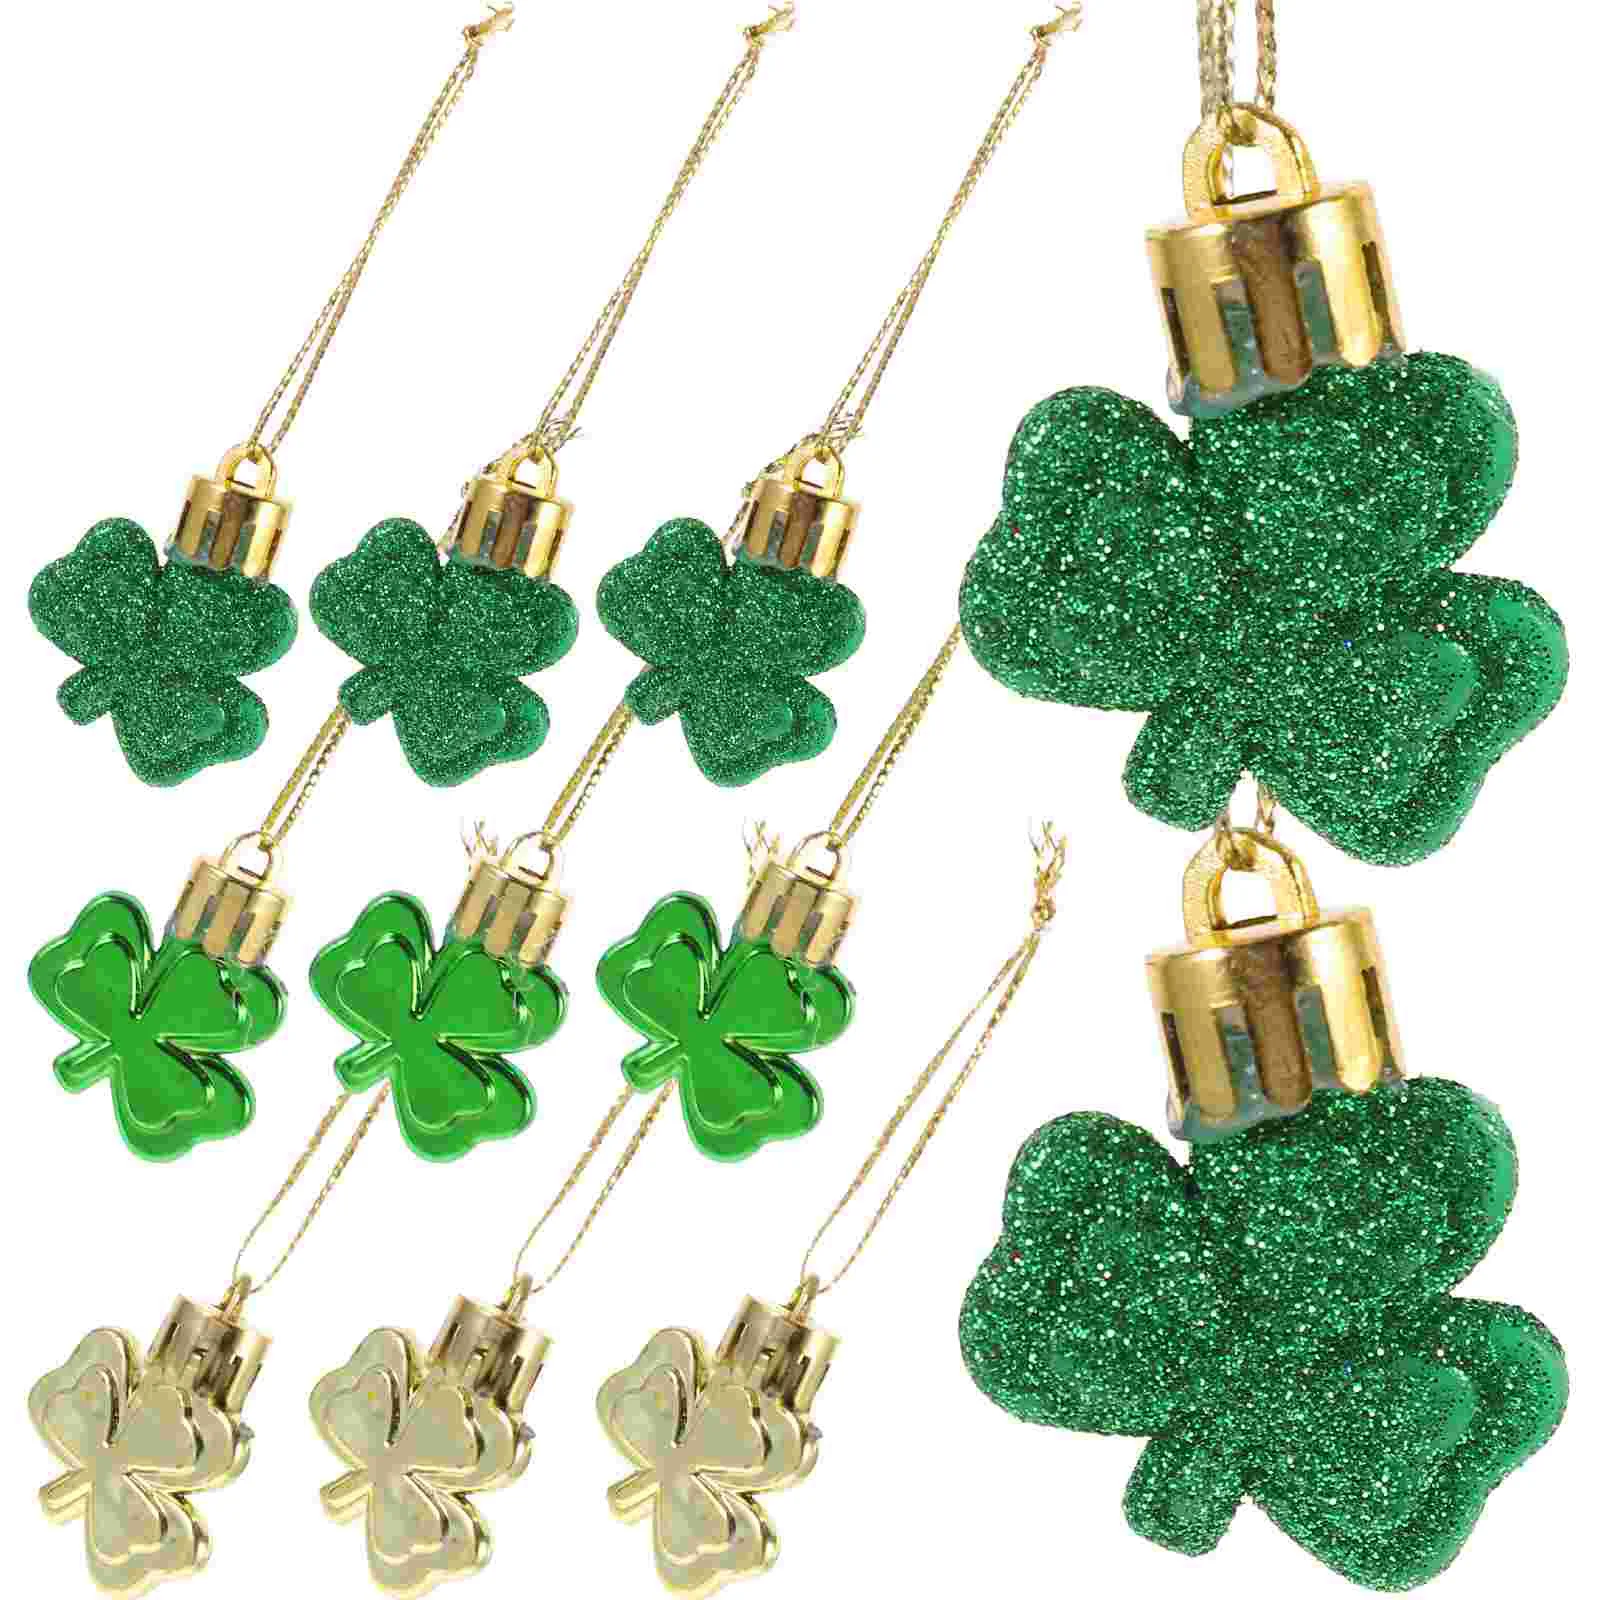 

Pendant St Patrick's Day Decorations Patricks Shamrock Hanging Adorn Shamrocks for Trees Themed Ornament Ornaments